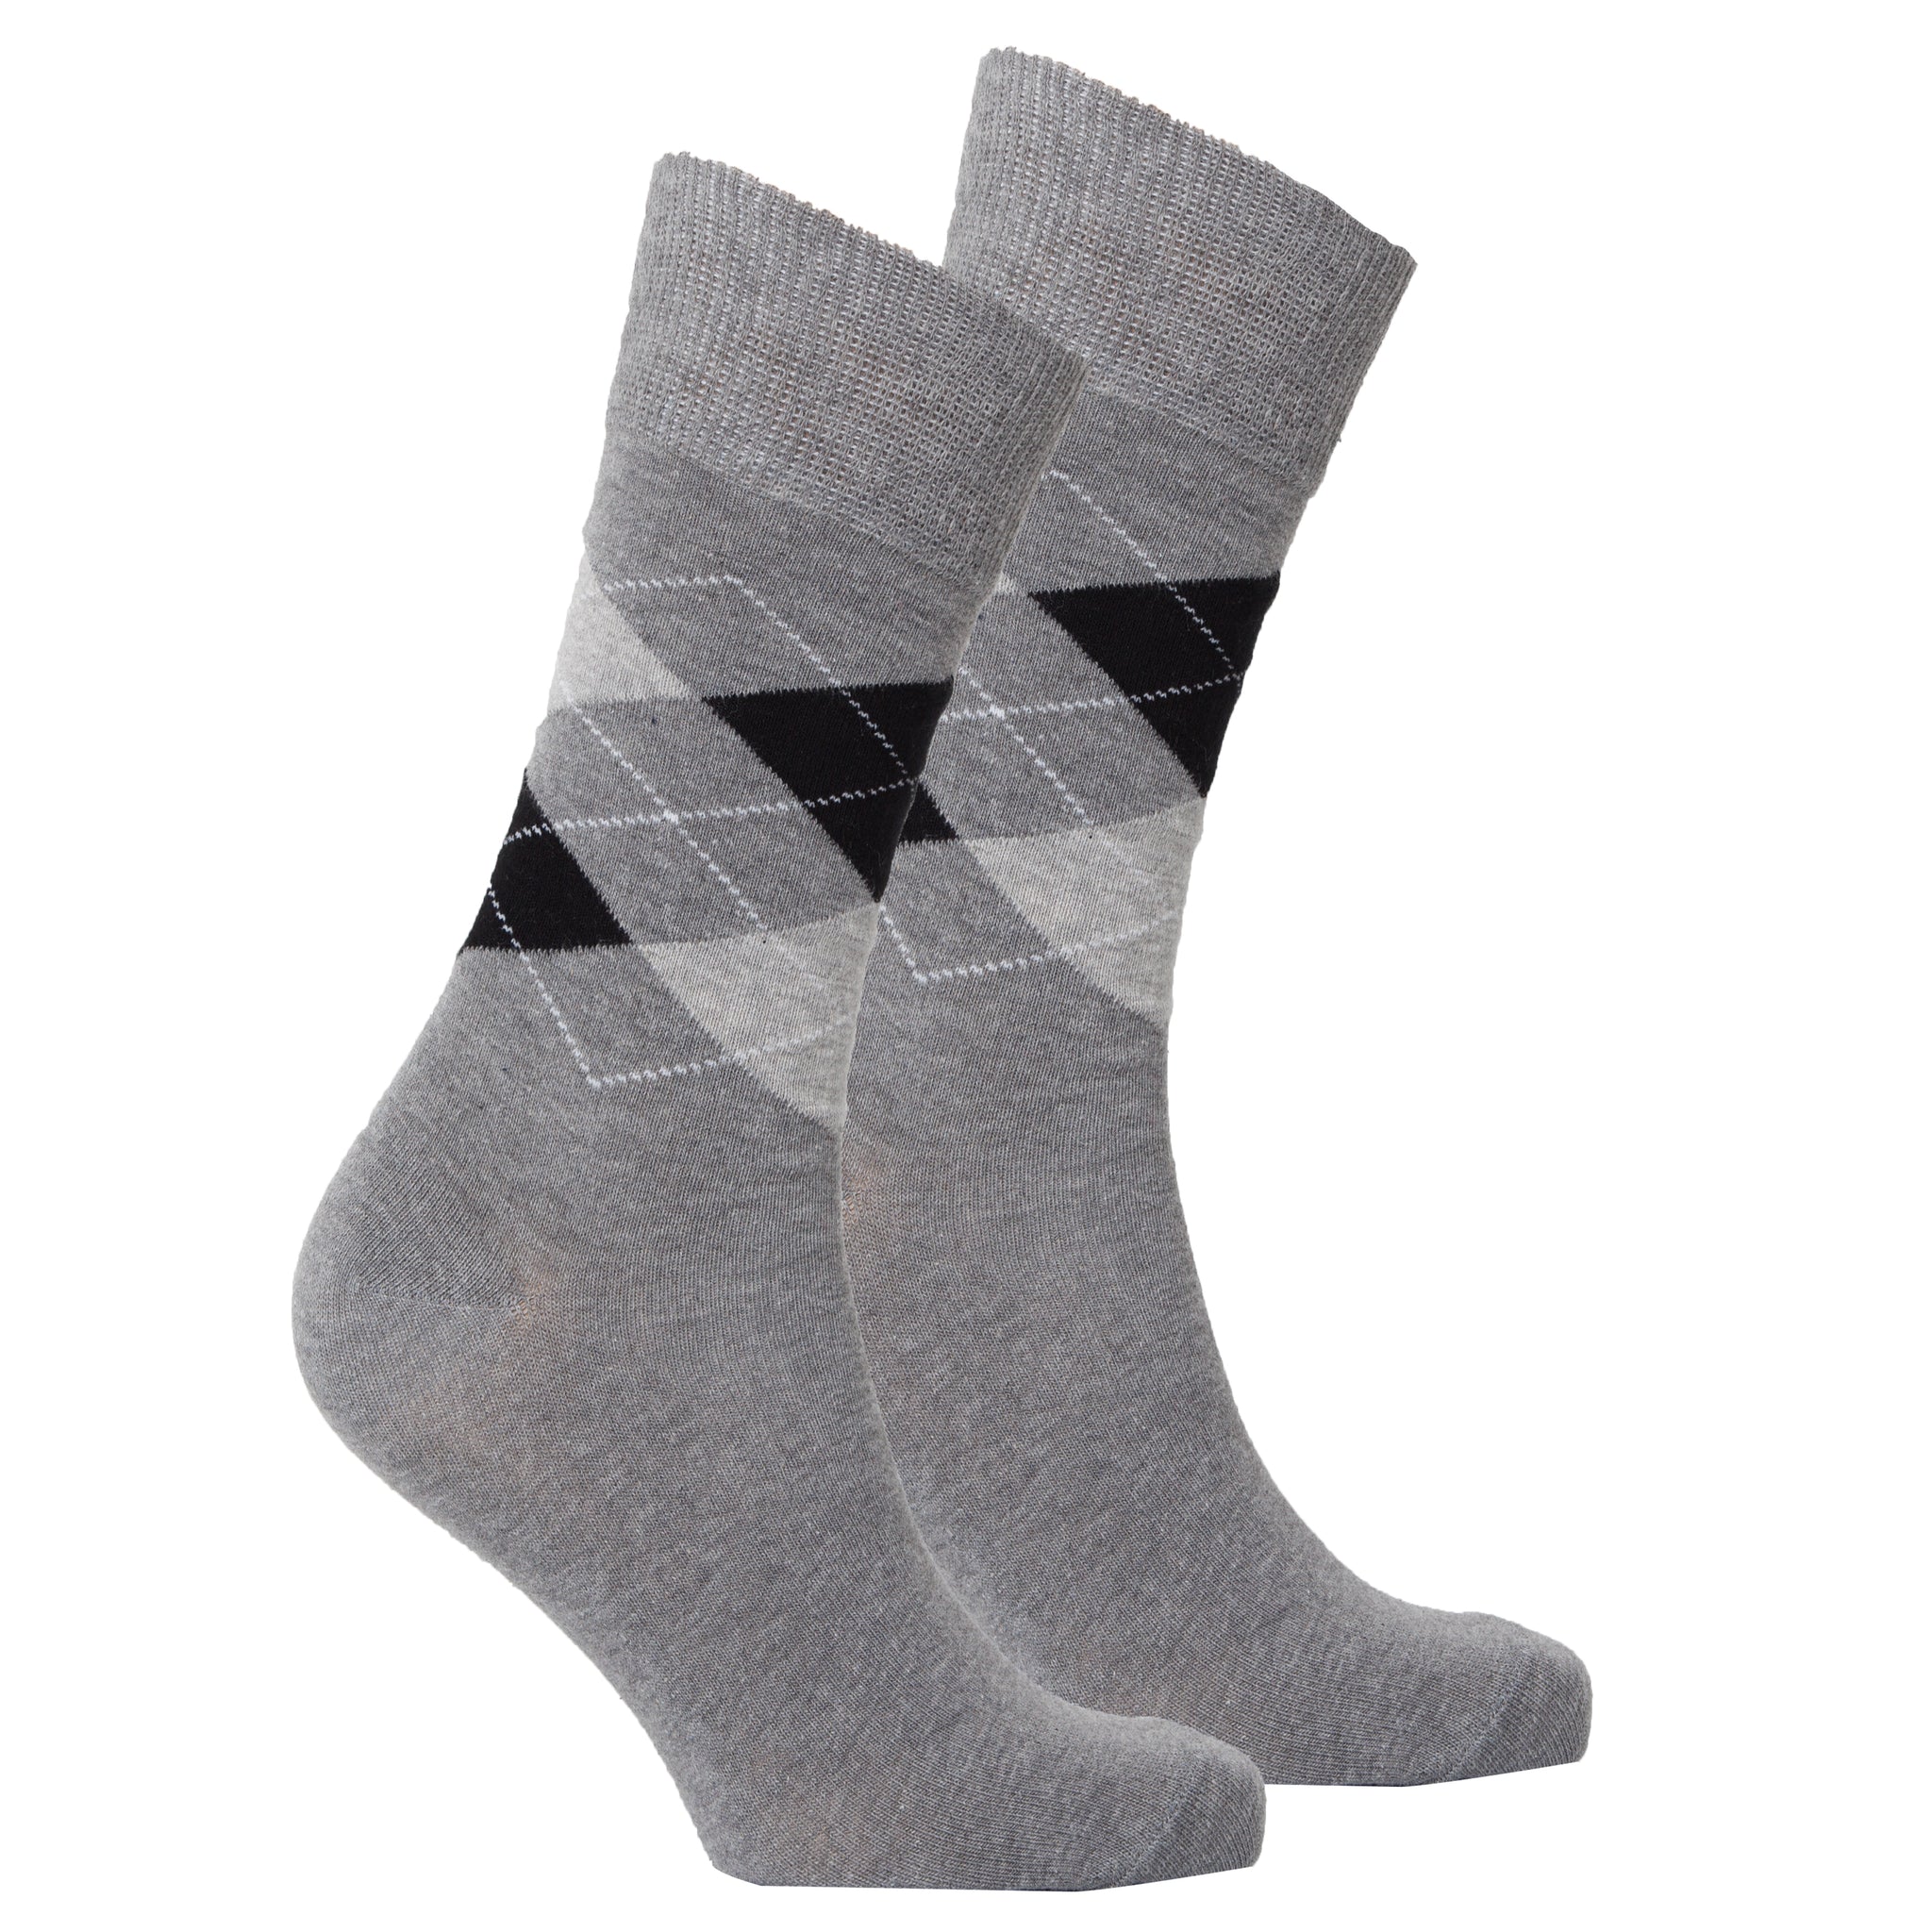 Men's Grey Argyle Socks